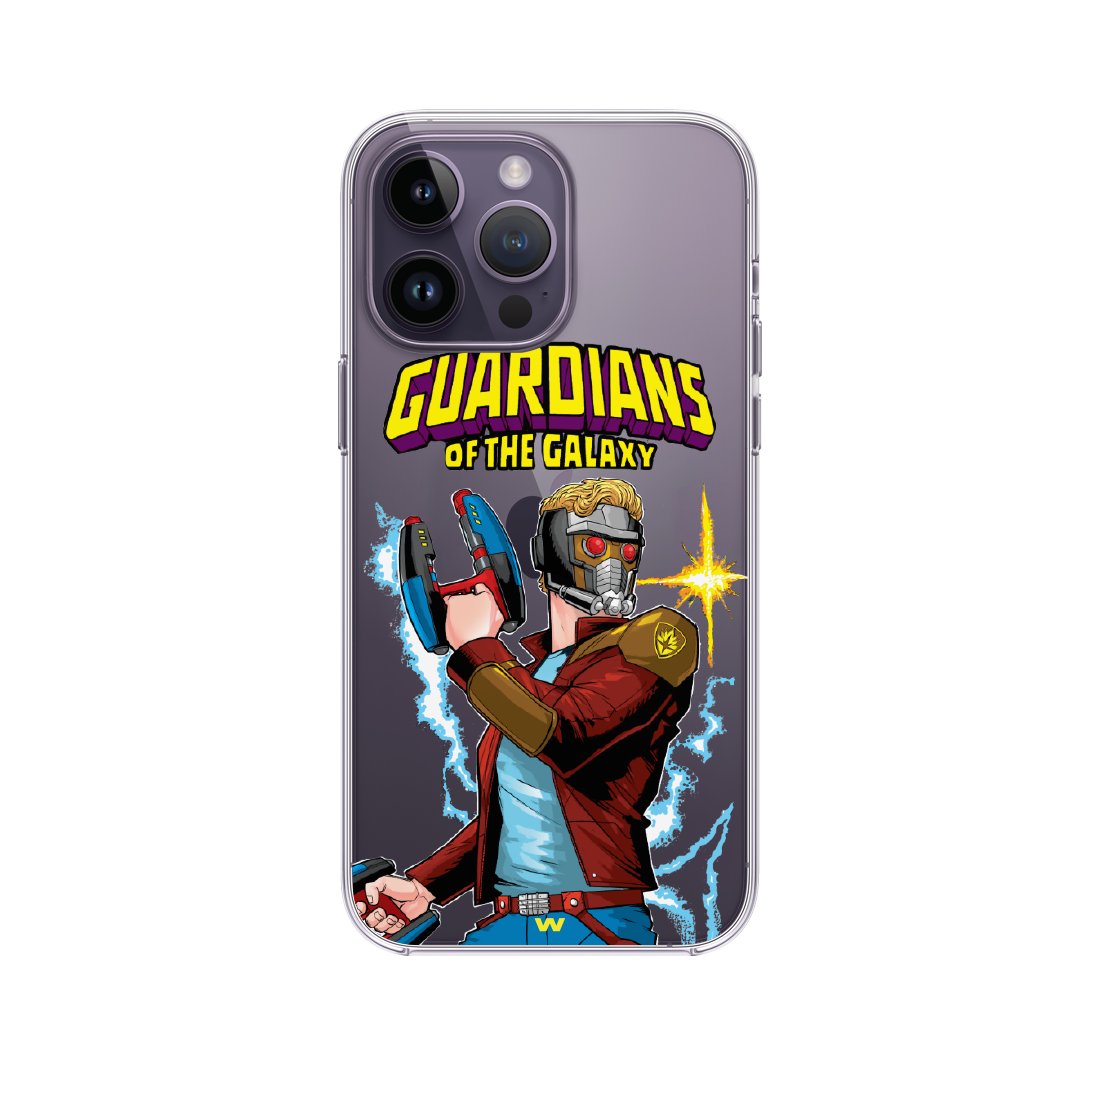 Guardians Of The Galaxy Telefon Kılıfı